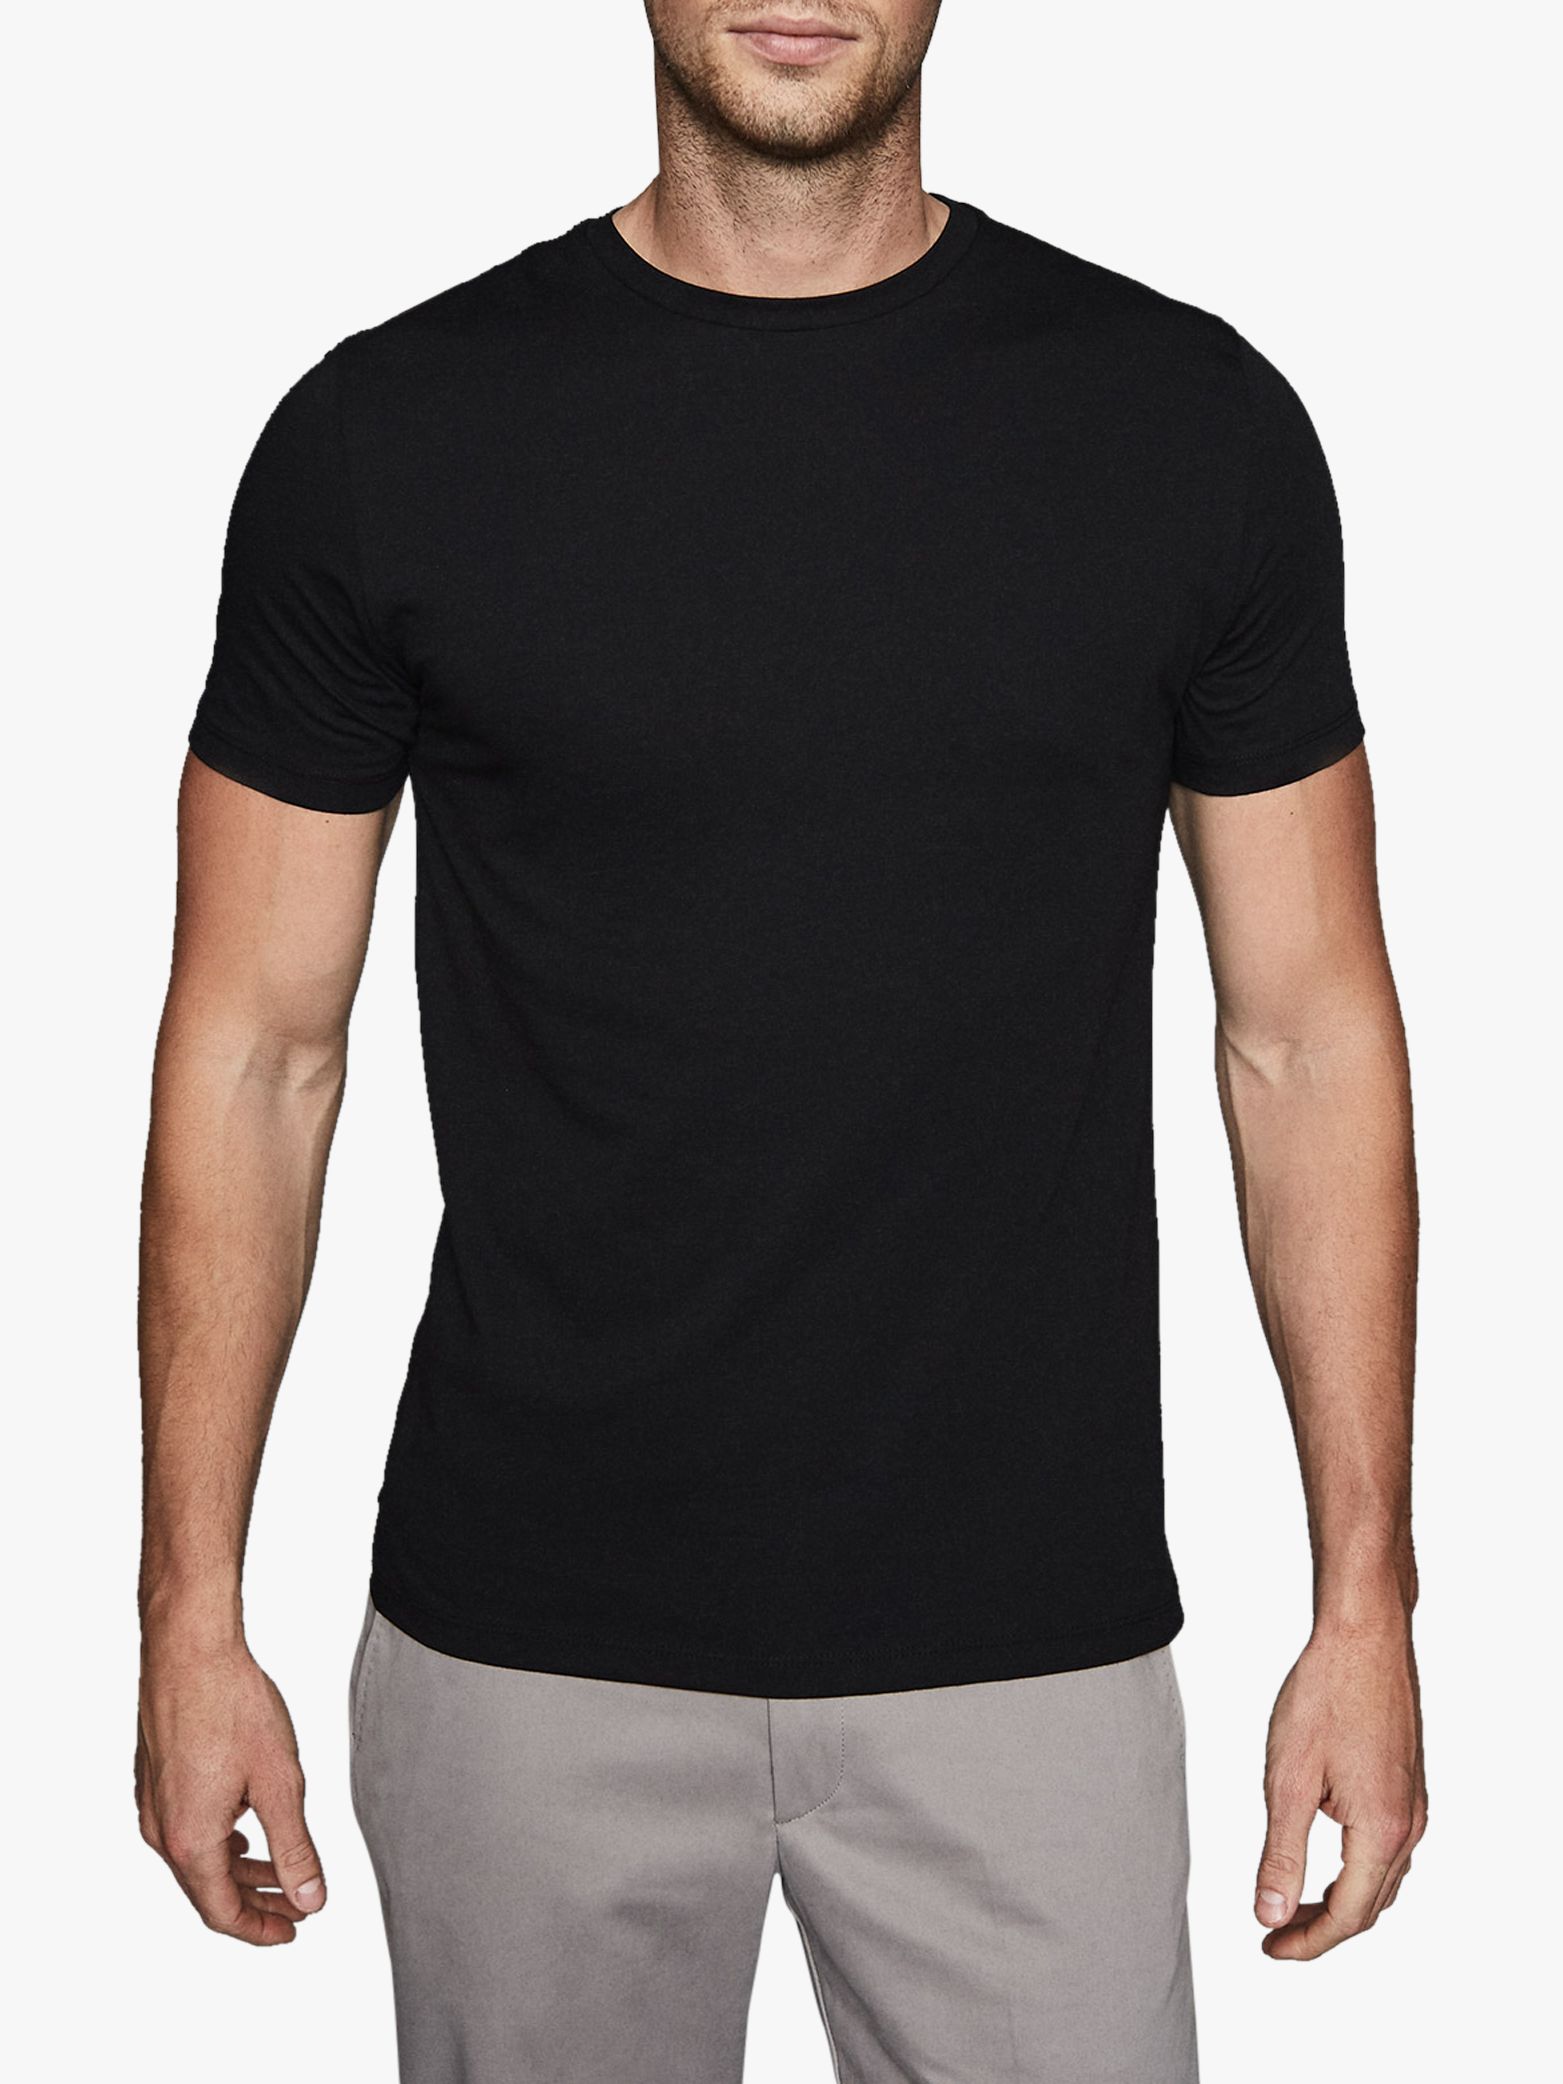 Reiss Bless Crew Neck T-Shirt, Black at John Lewis & Partners